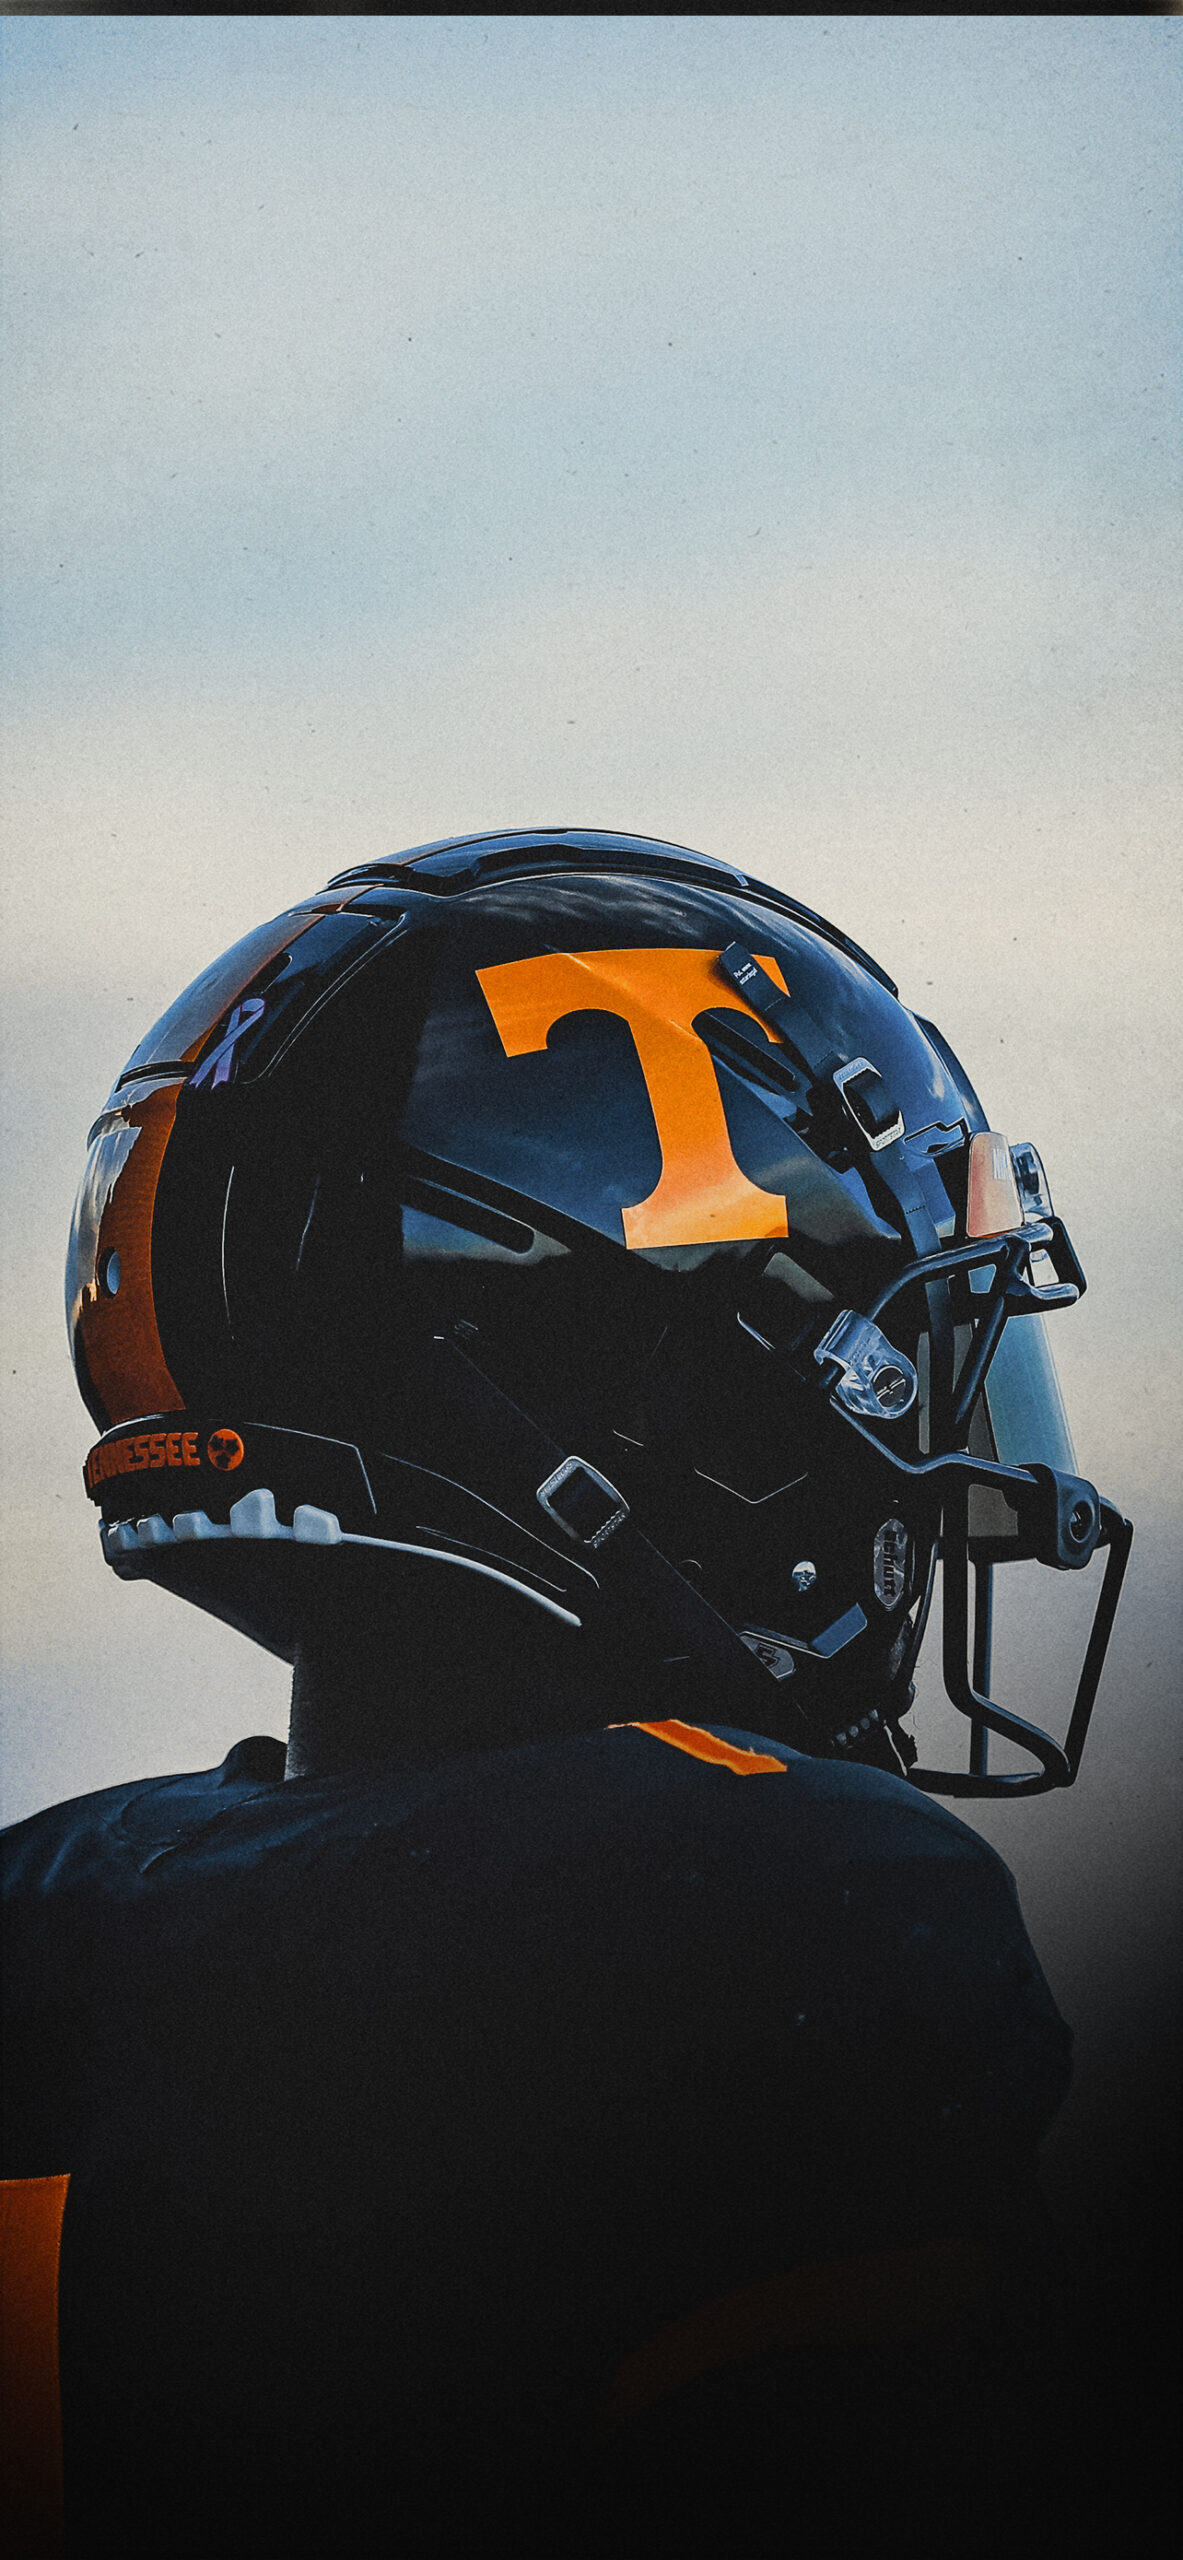 Tennessee Reveals Dark Mode Uniforms With Black Helmets